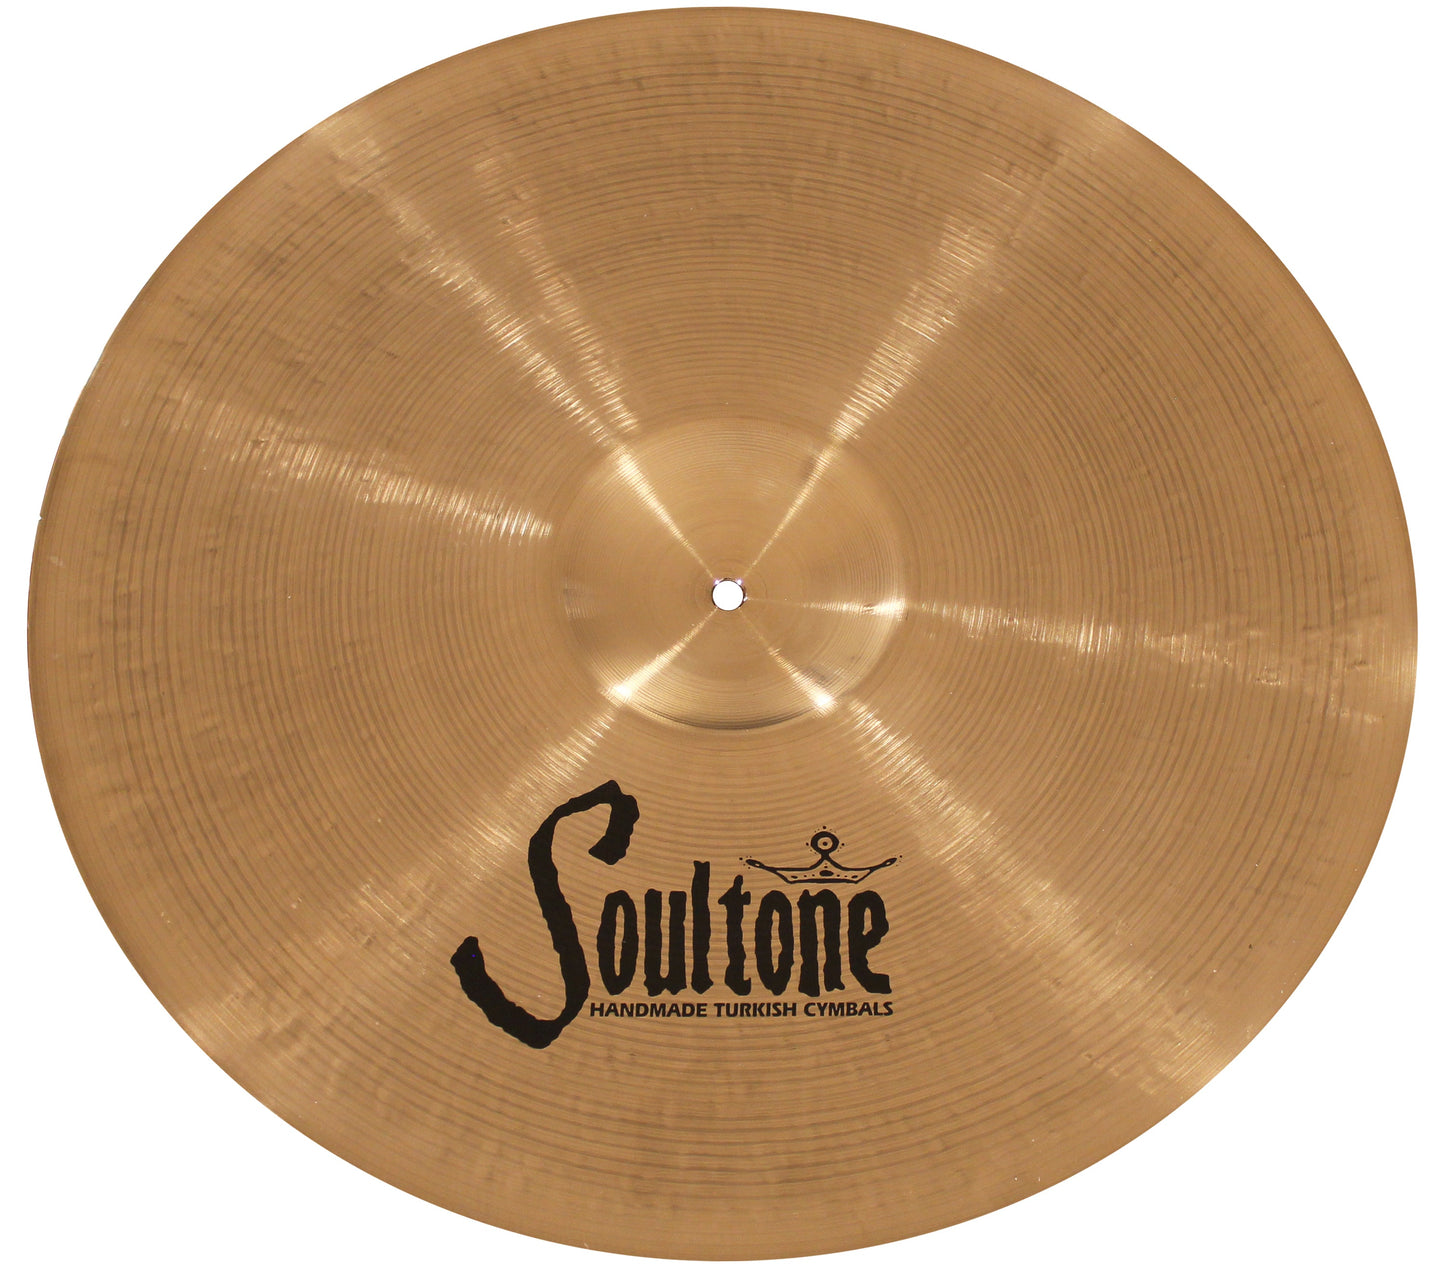 Soultone Cymbals Natural Brilliant with Brilliant Bell Crash / Ride